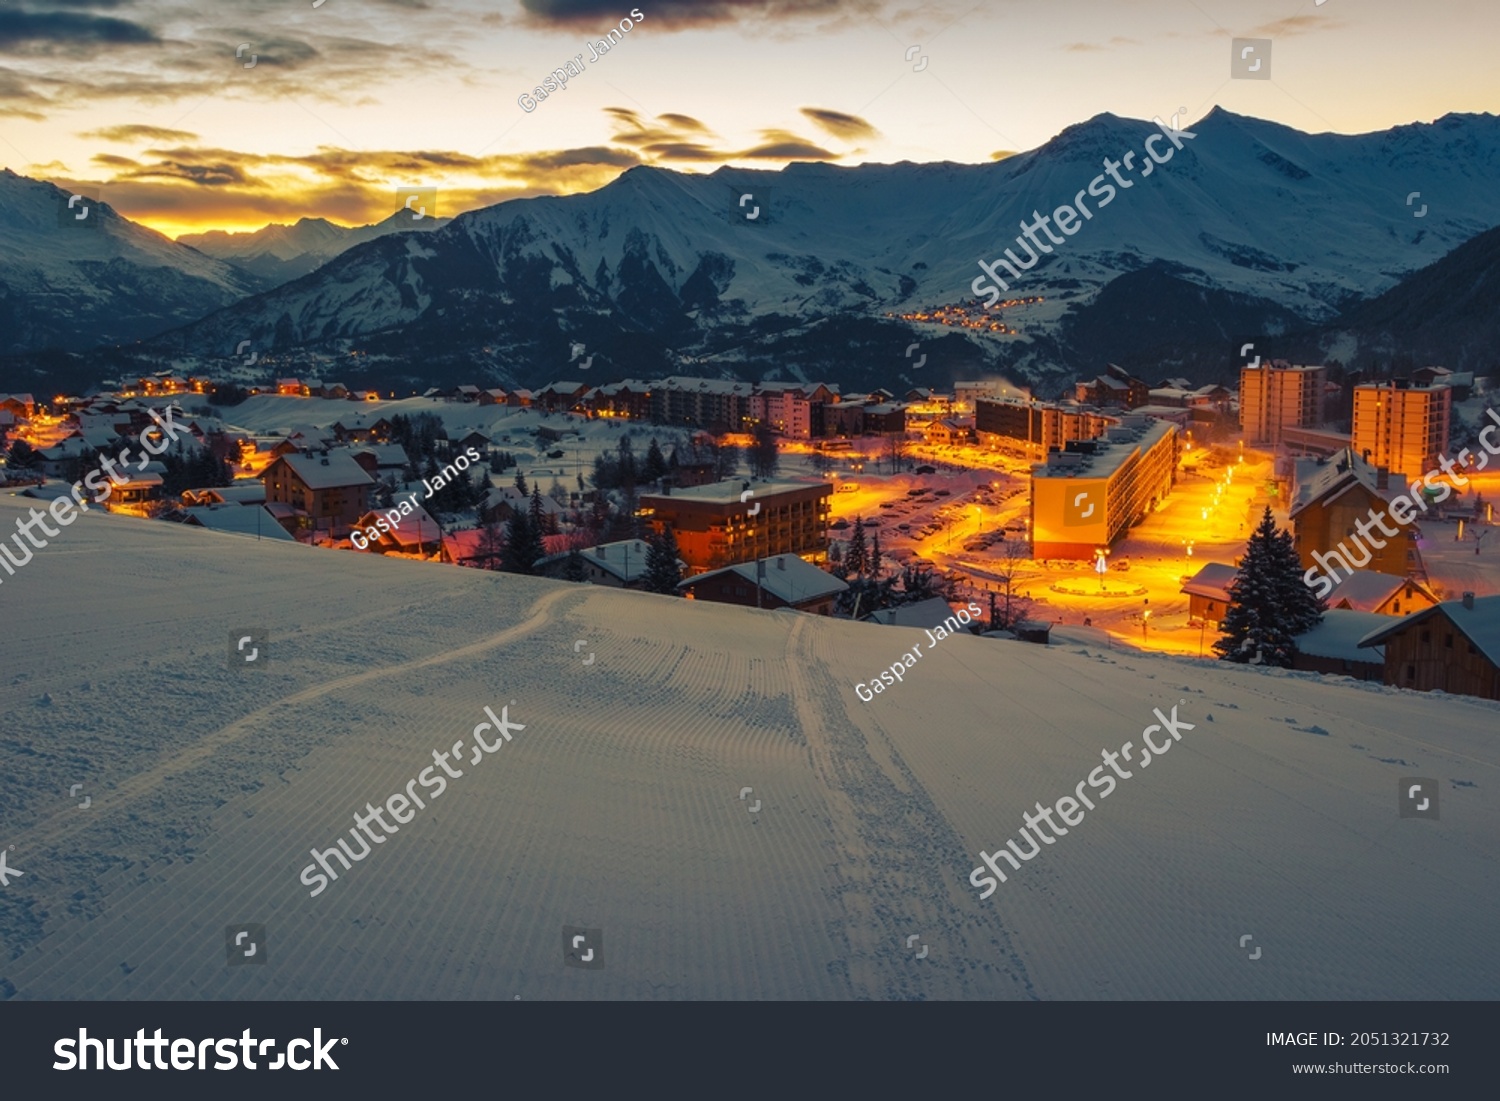 Beautiful alpine winter ski resort with majestic street lights at dawn. Mountain resort and ski slopes at sunrise, La Toussuire, Rhone Alps, France, Europe #2051321732